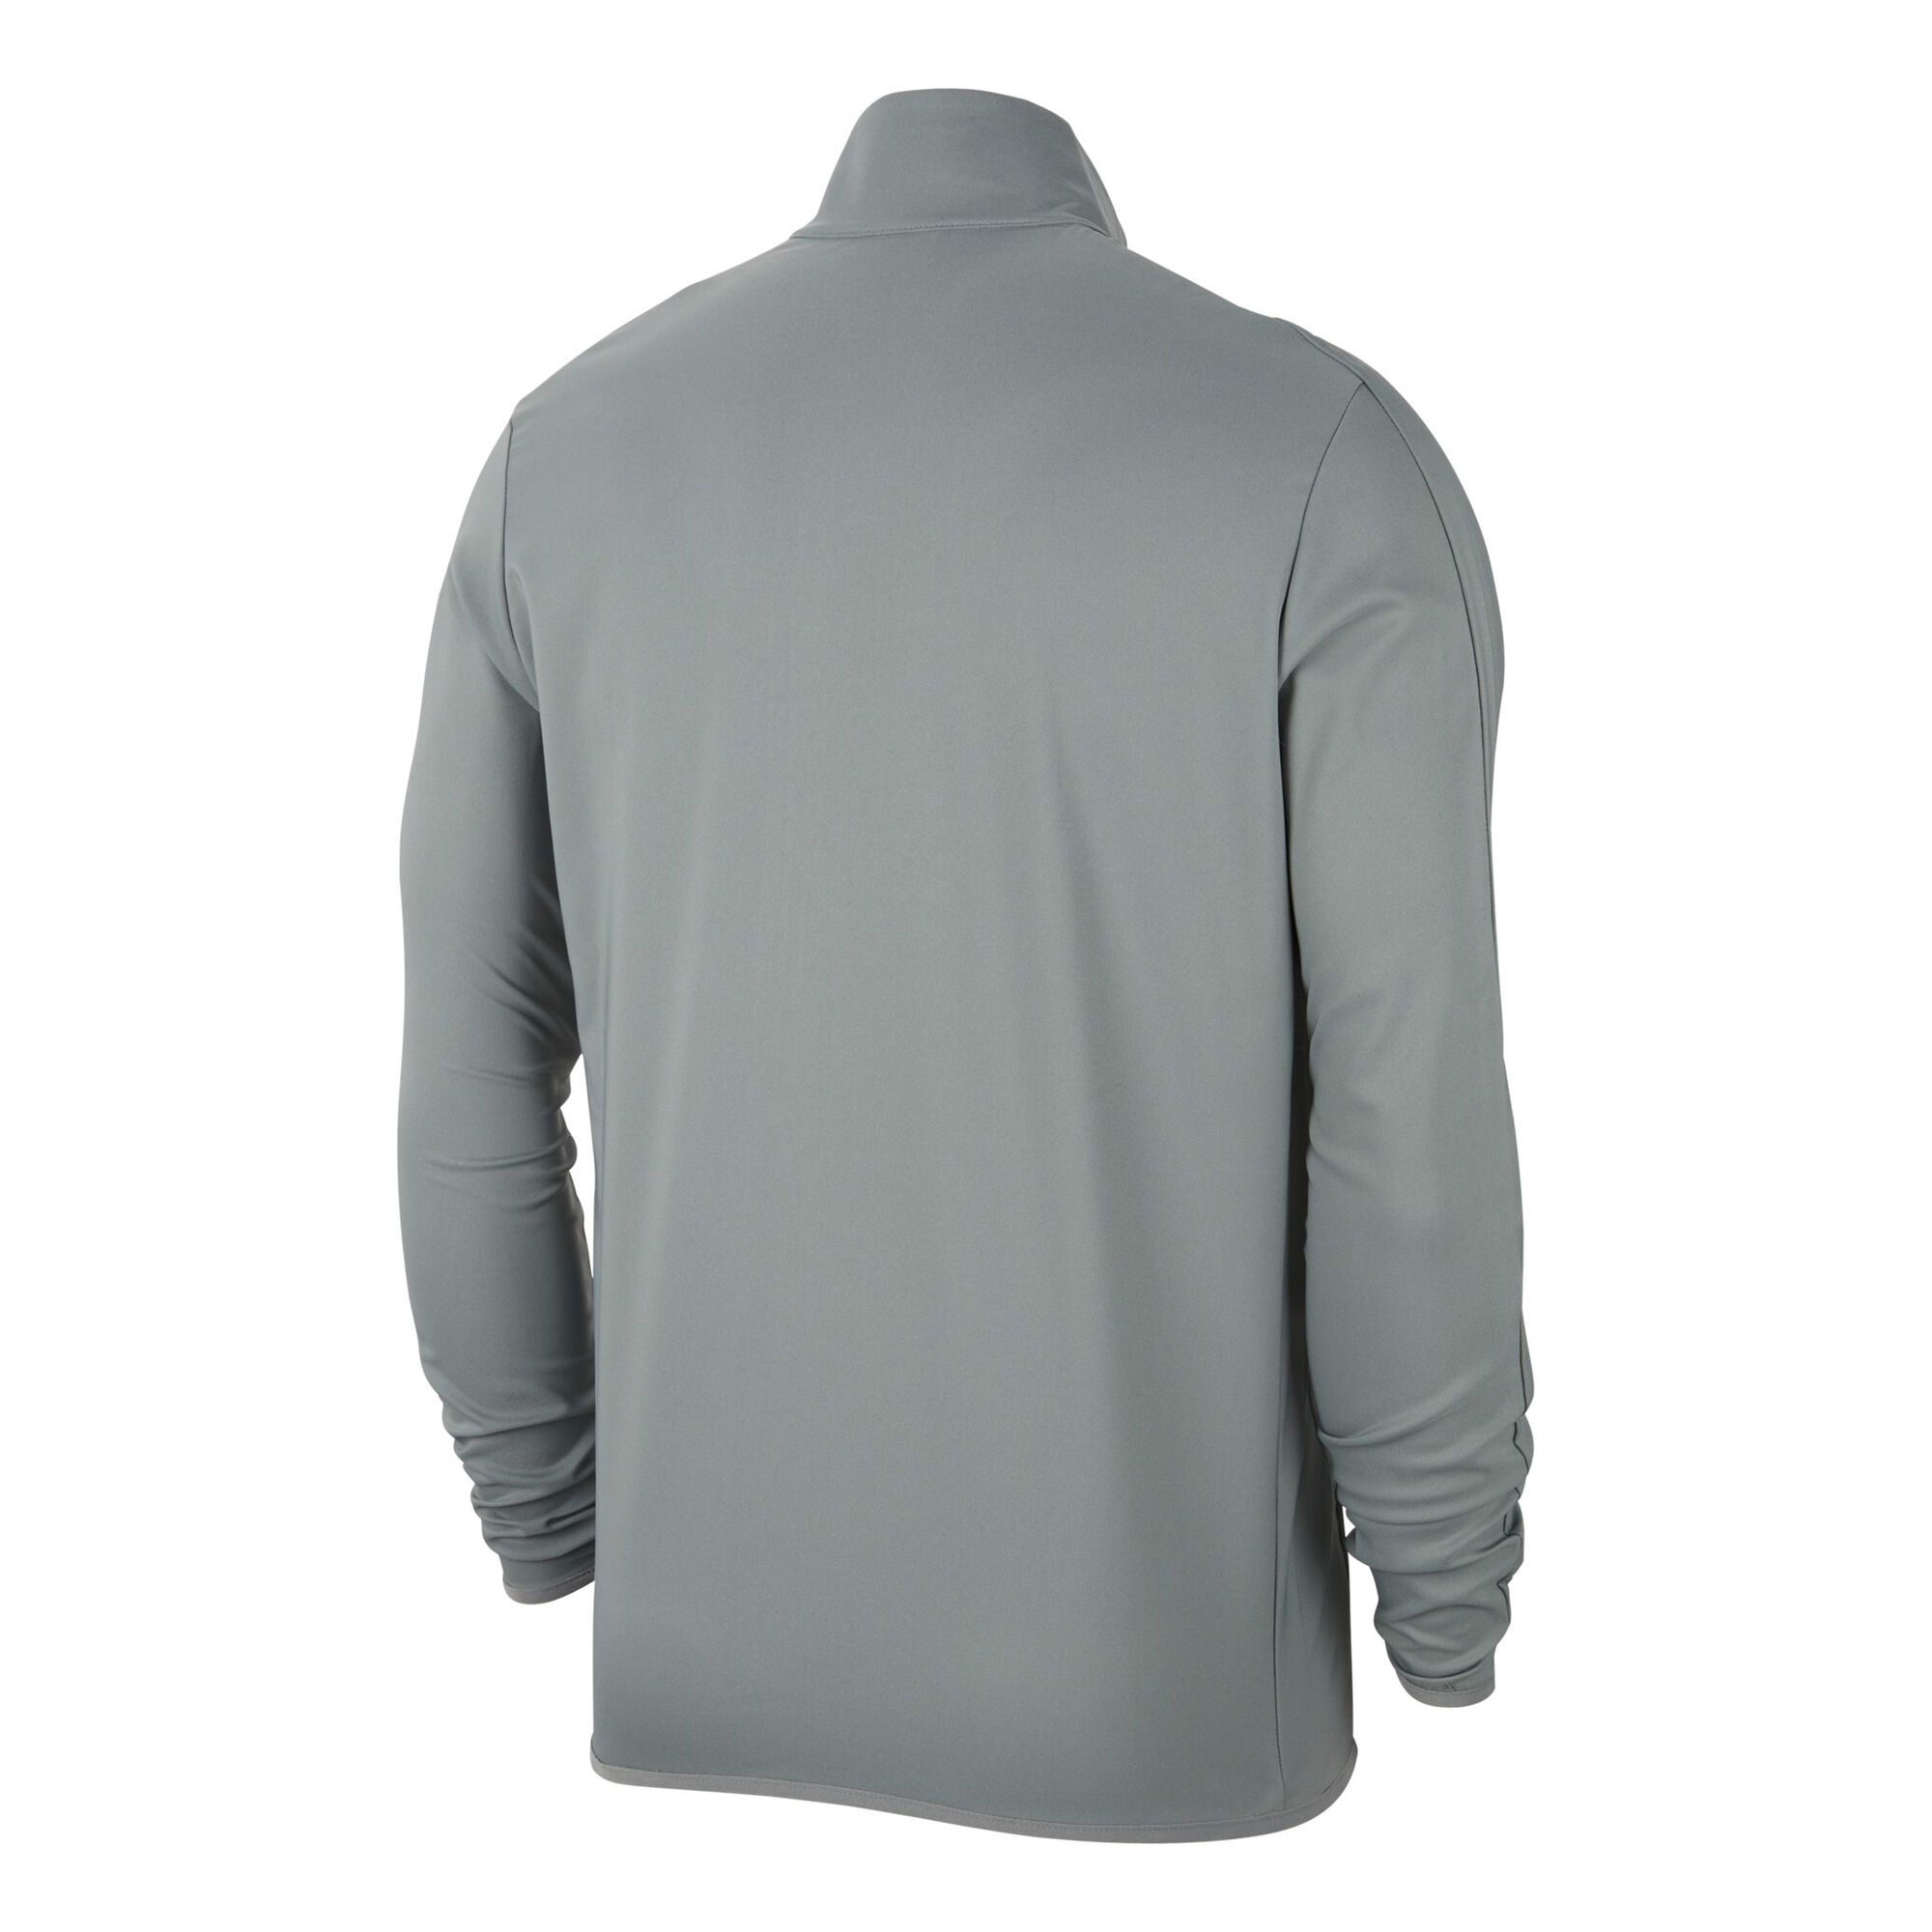 Buy Nike Dri-Fit Woven Training Jacket Men Grey online | Tennis Point UK